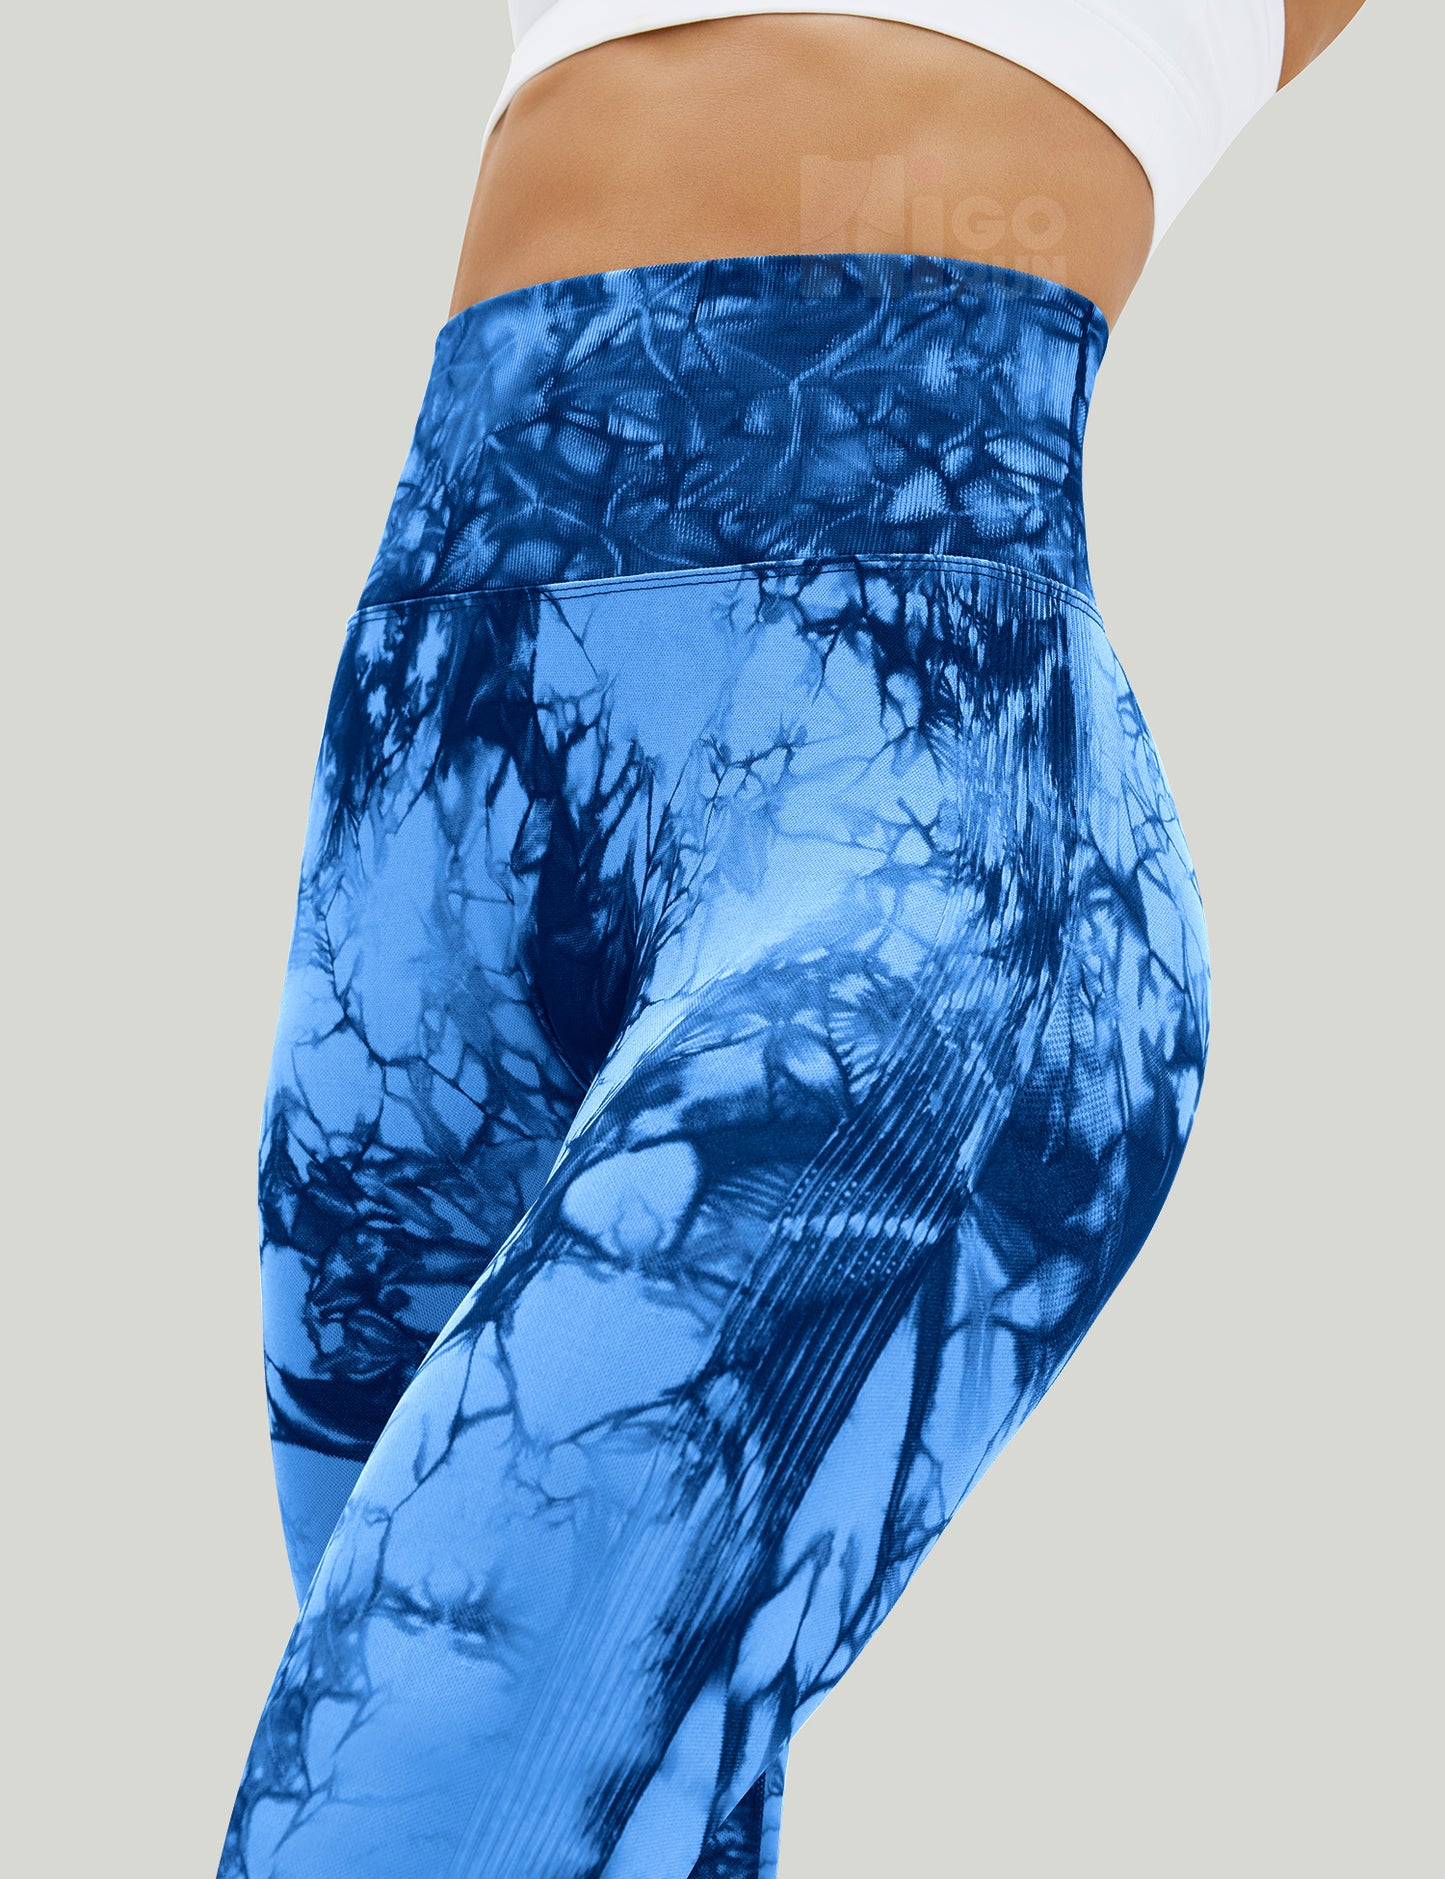 HIGORUN Tie-Dye Workout Seamless Leggings for Women High Waist Gym Leggings Yoga Pants apphire